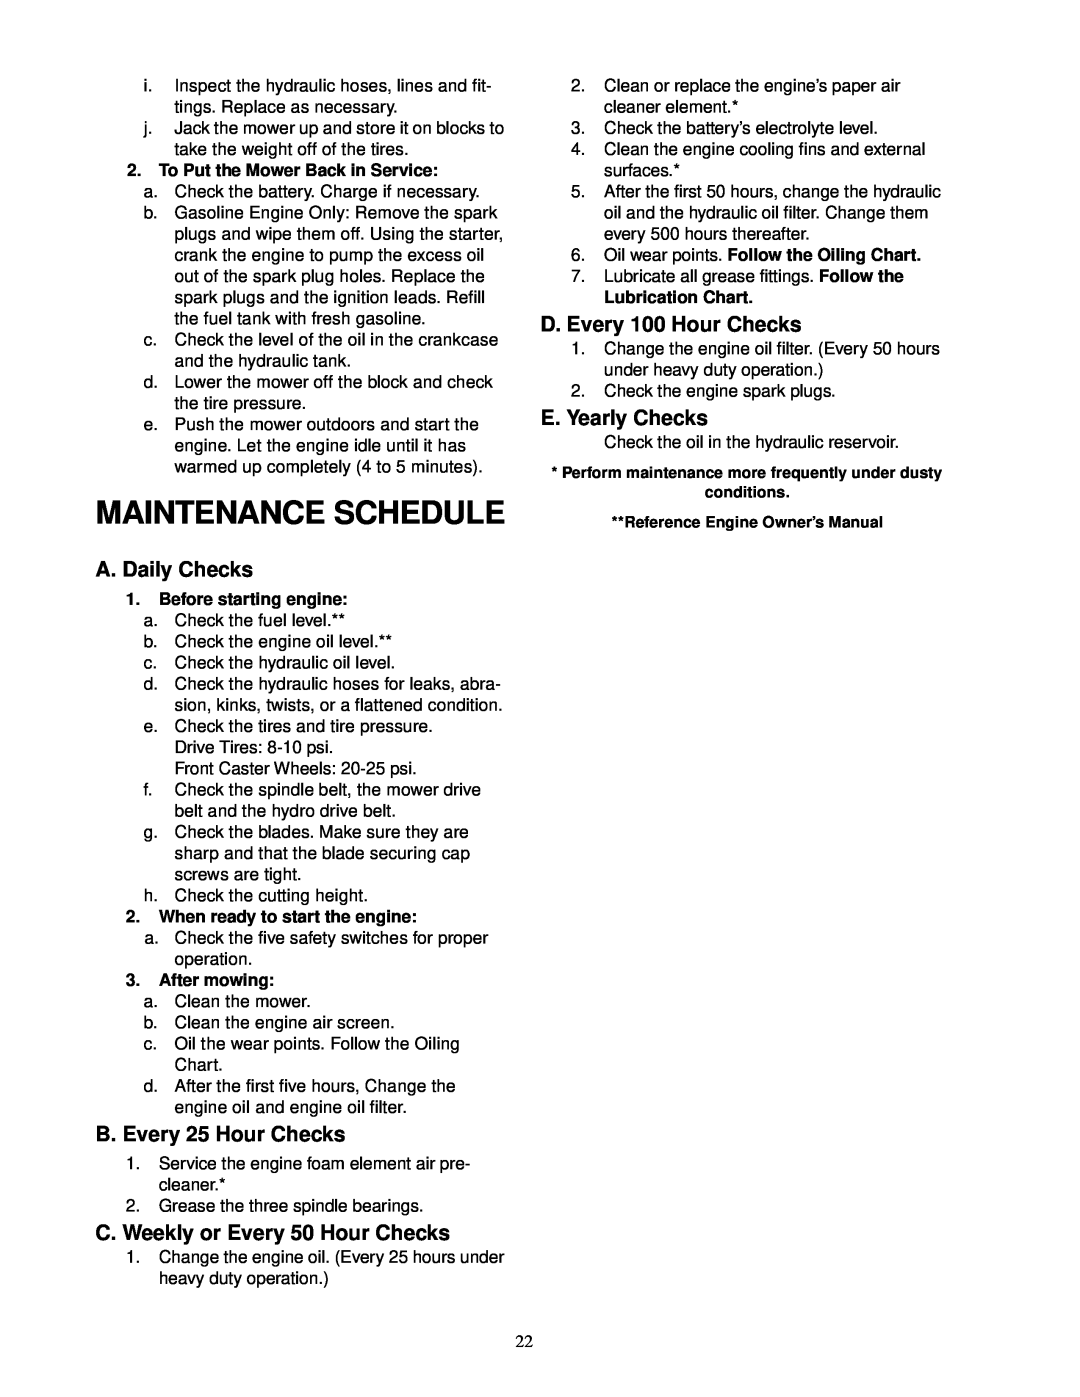 Cub Cadet 18HP Maintenance Schedule, A. Daily Checks, B.Every 25 Hour Checks, C.Weekly or Every 50 Hour Checks 